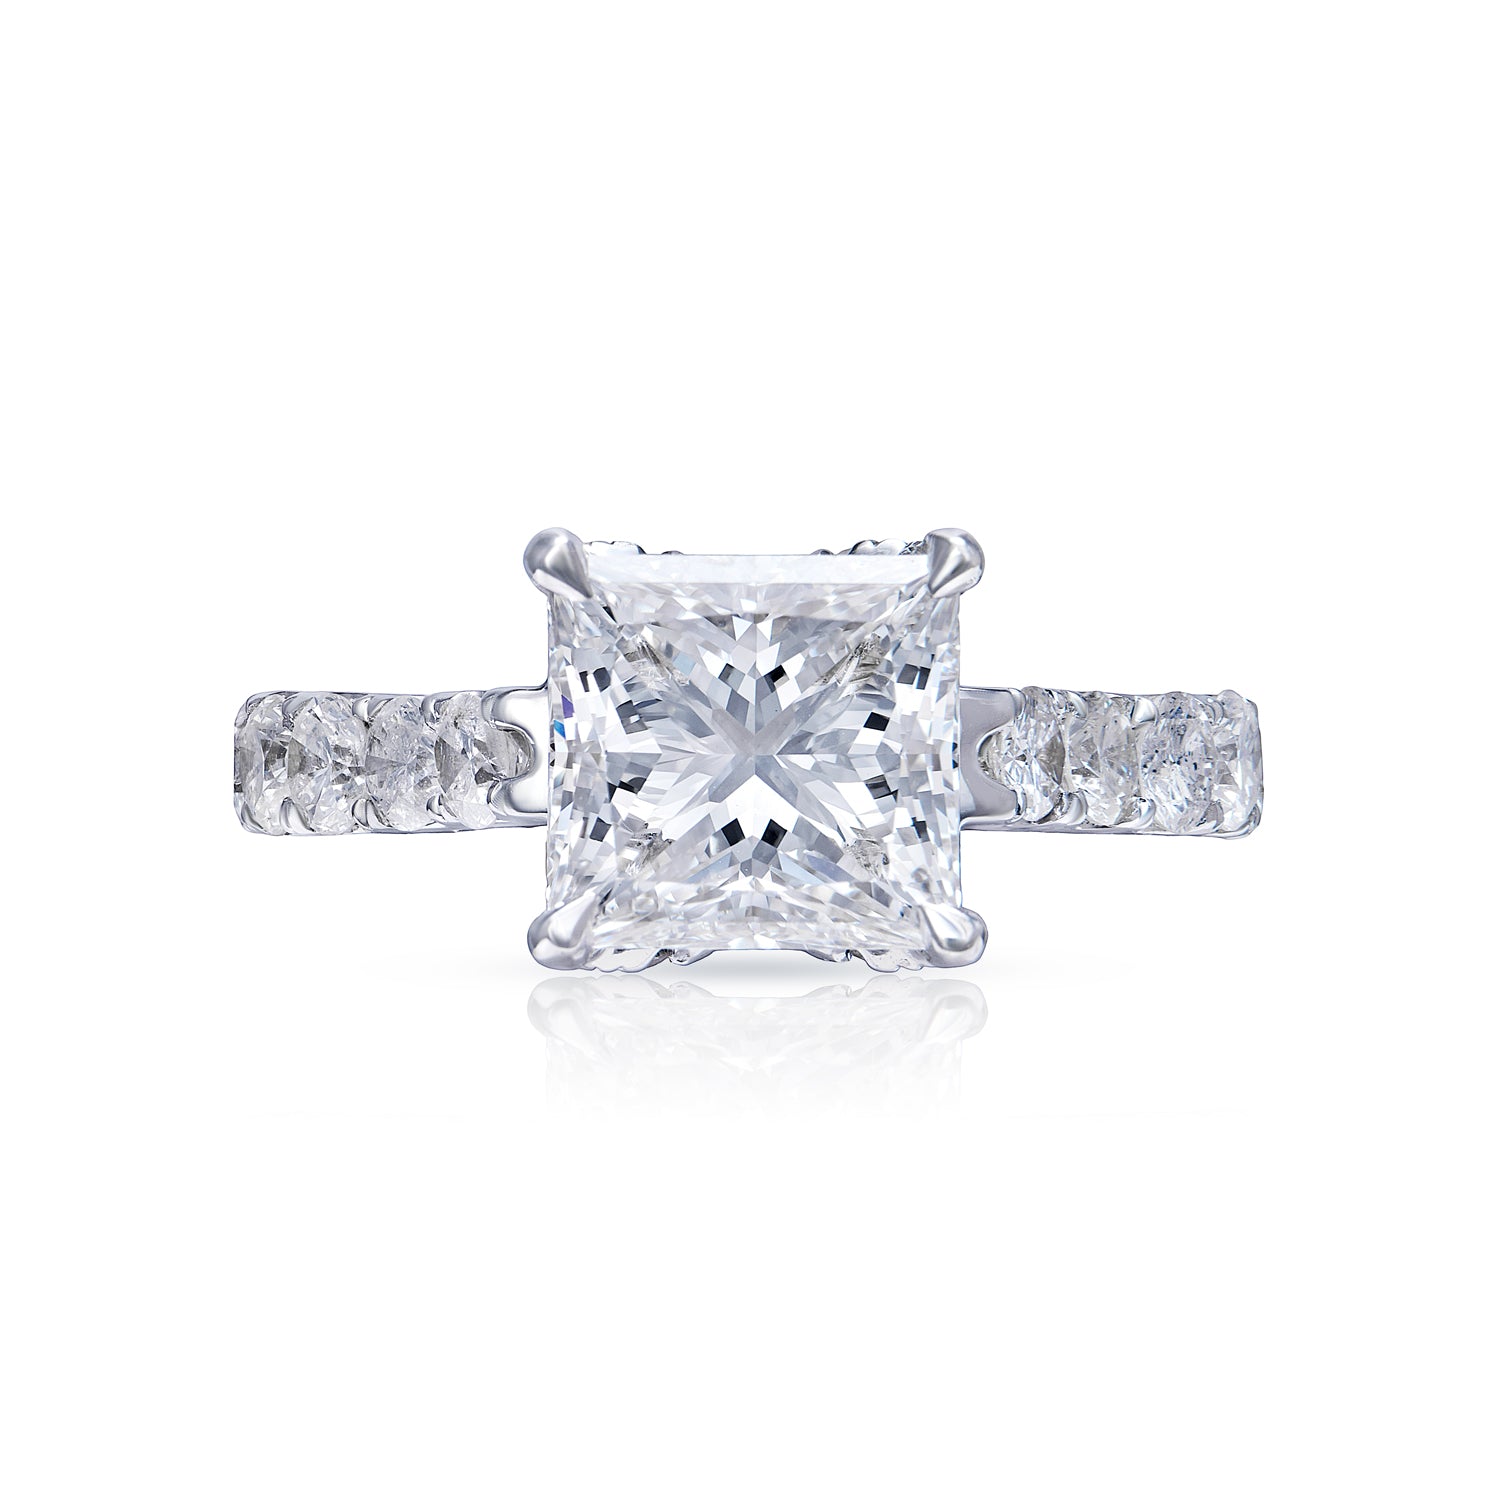 LADON 4 Carat F VVS2 Princess Cut Lab Grown Diamond Engagement Ring Front View